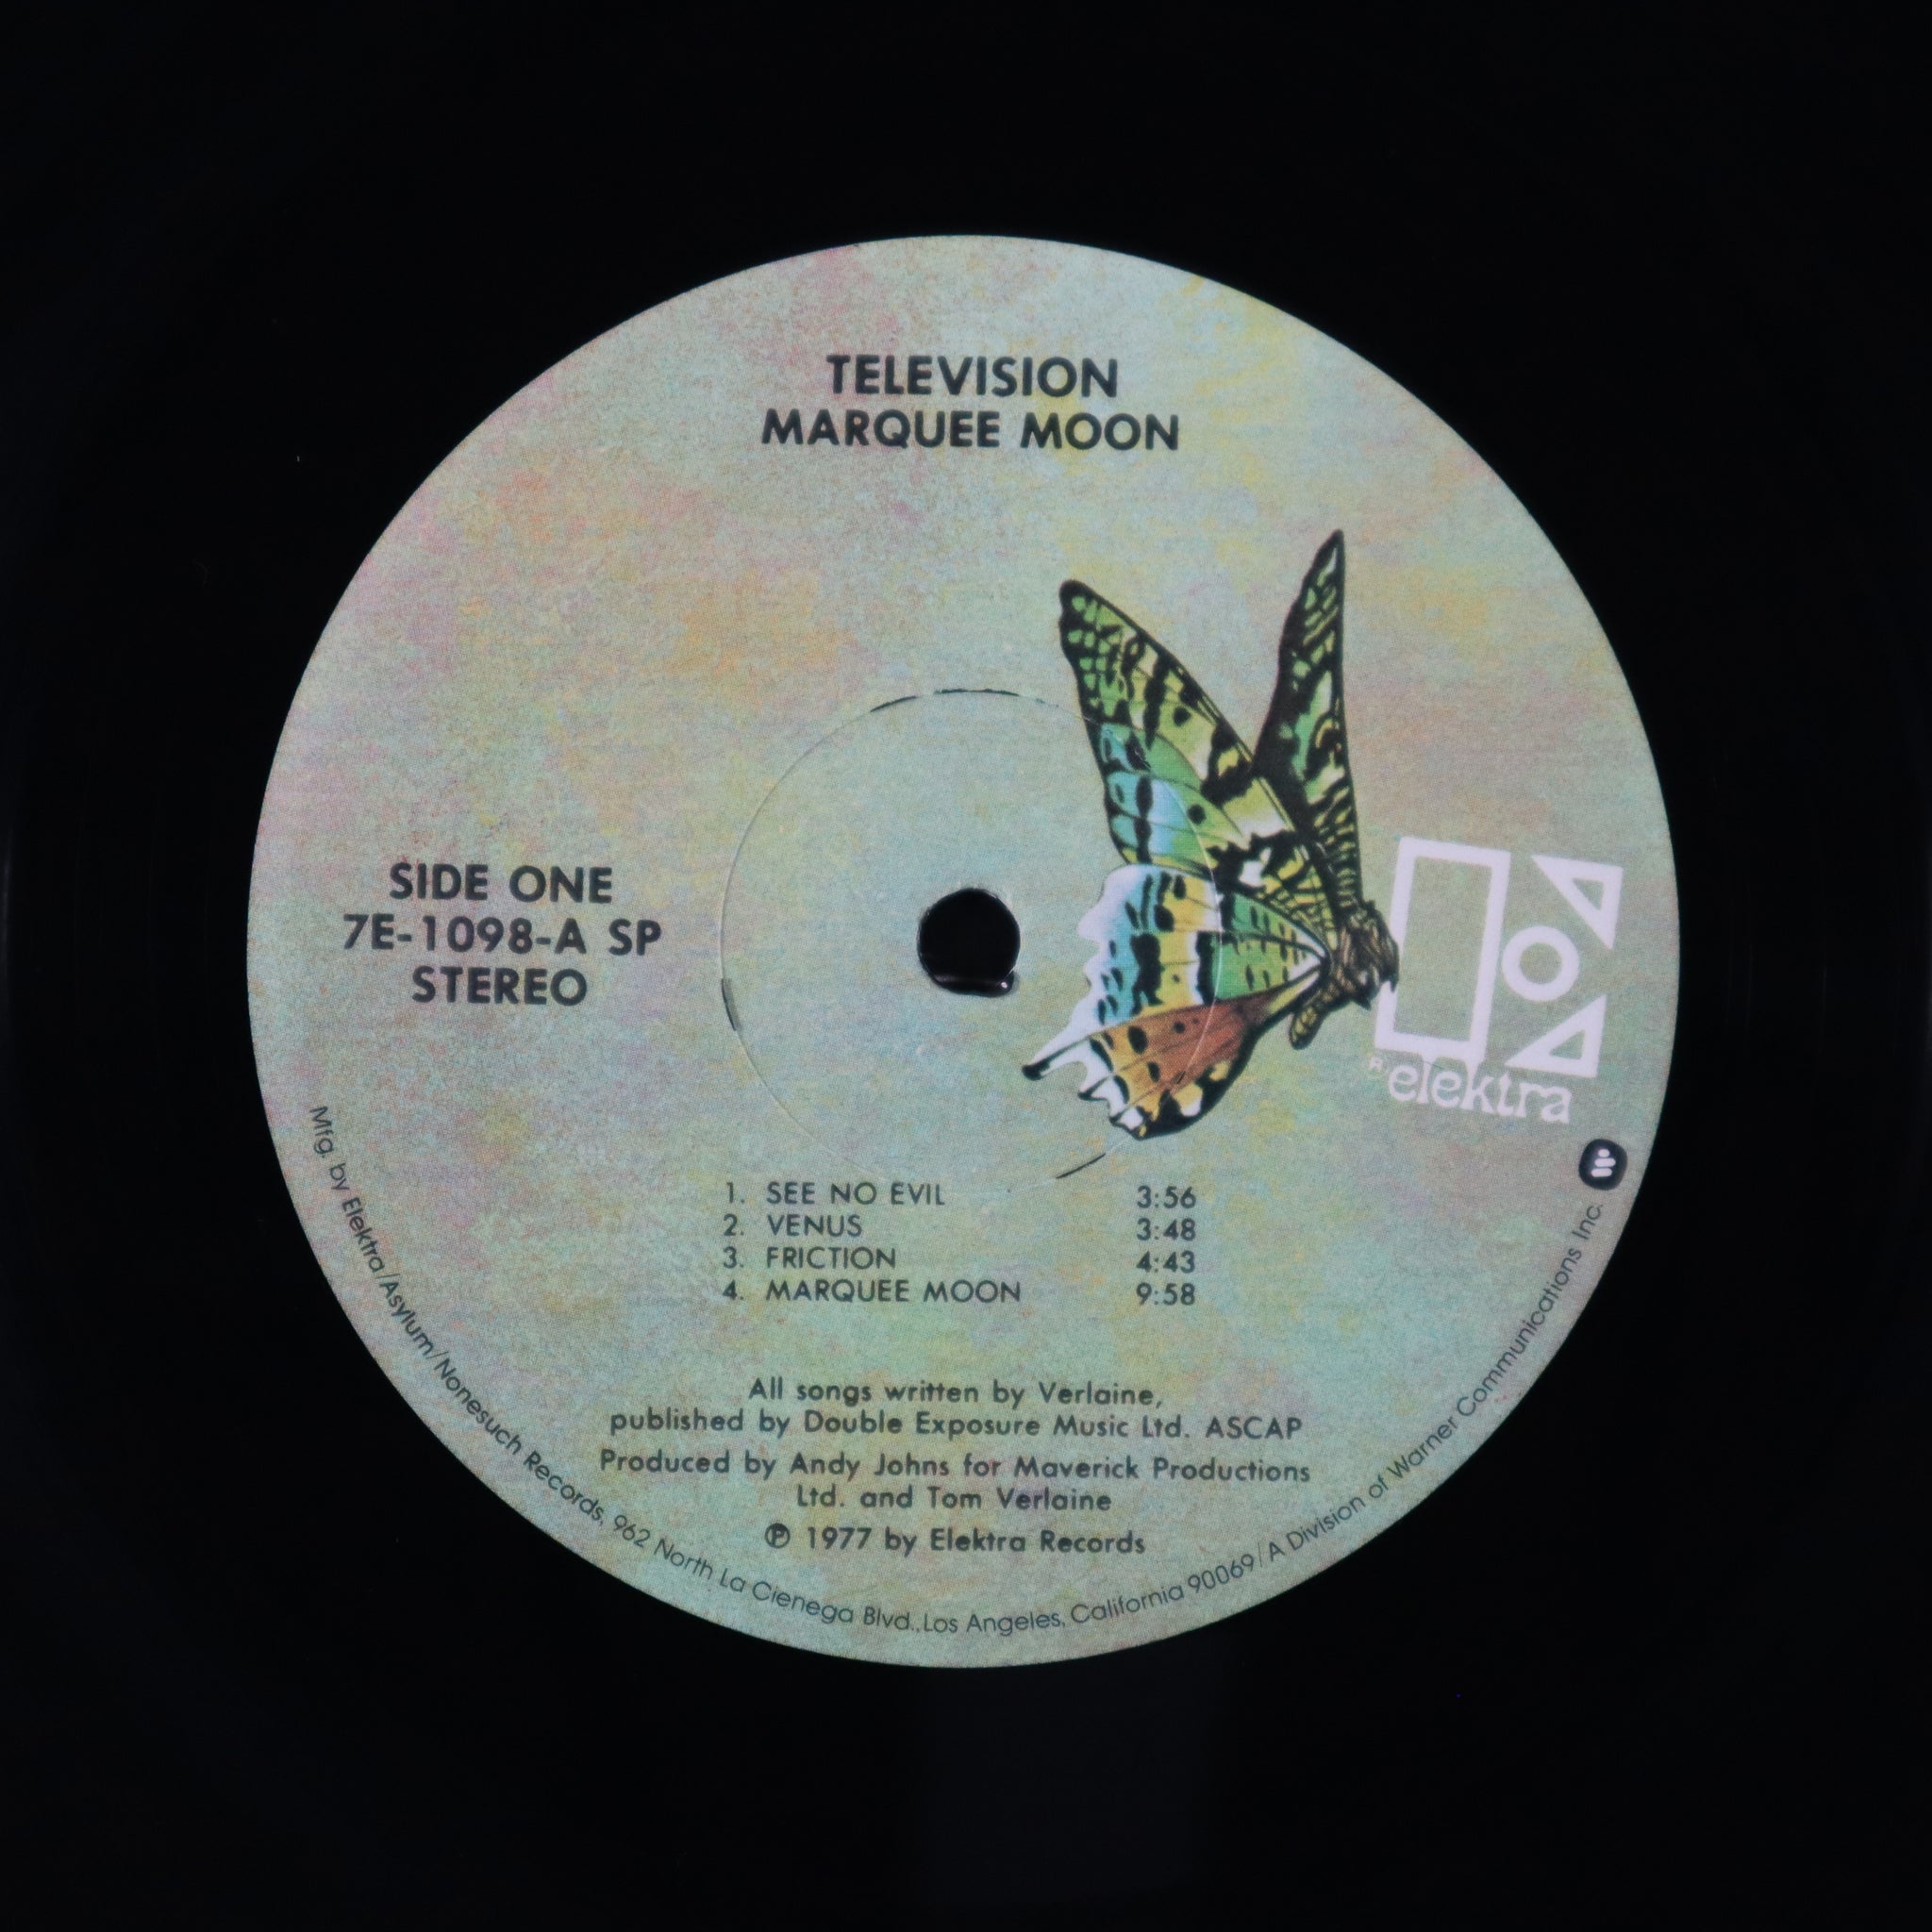 Television - Marquee Moon (blue vinyl) — Shortstack Records